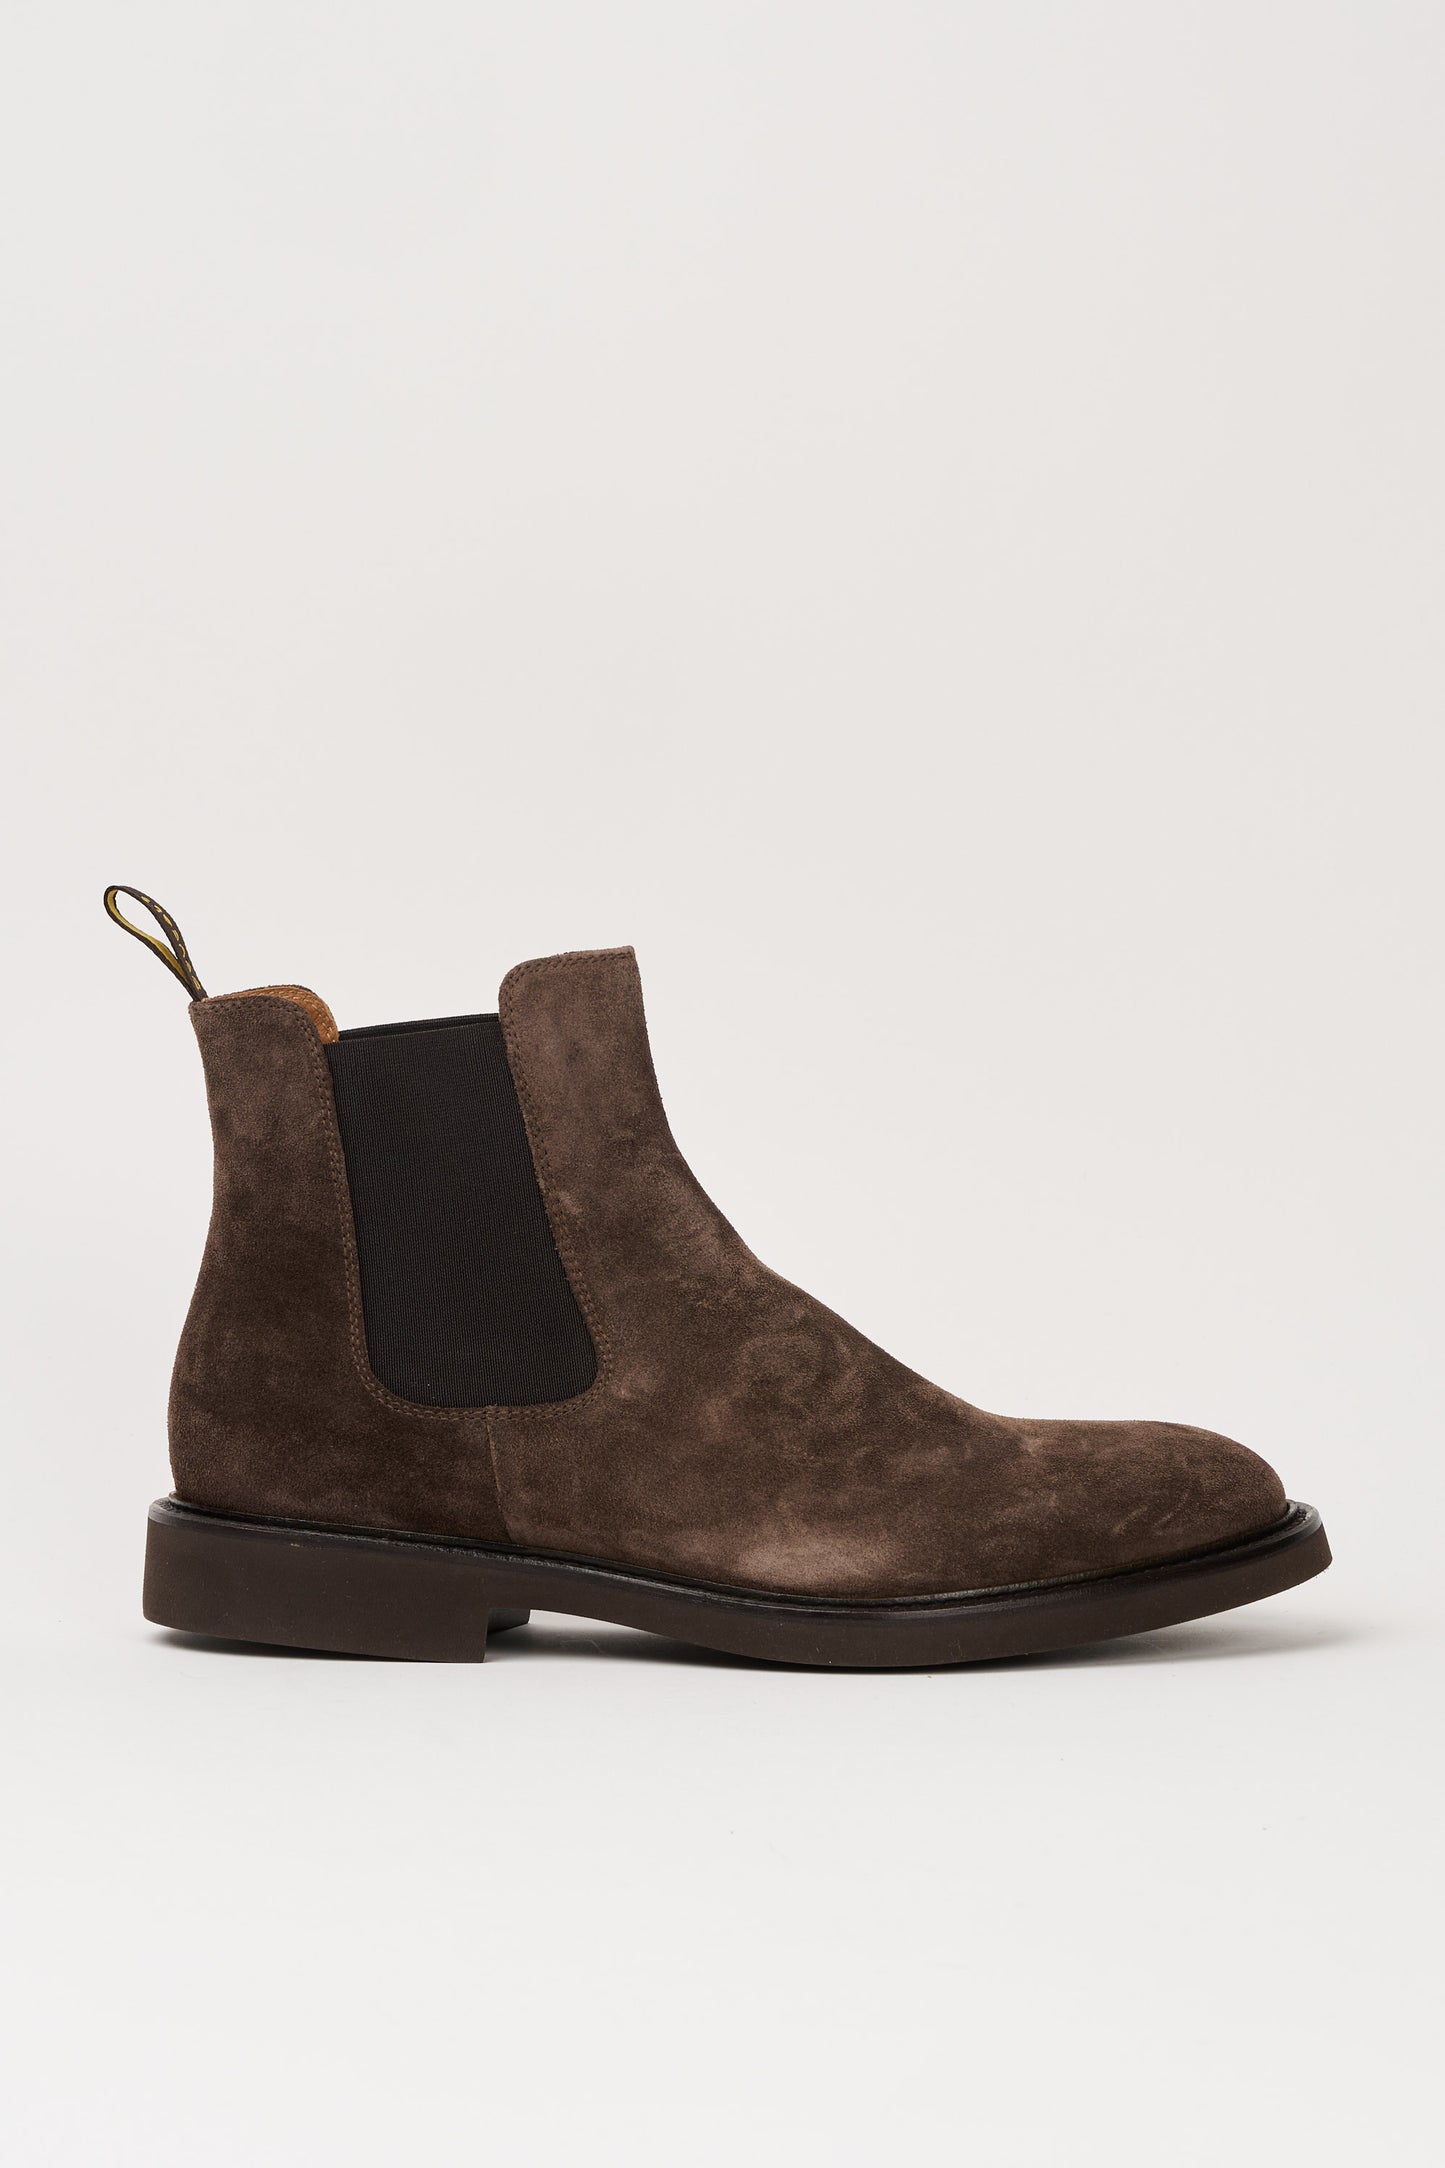  Doucal's Men's Brown Ankle Boot 92220-18334 Marrone Uomo - 8